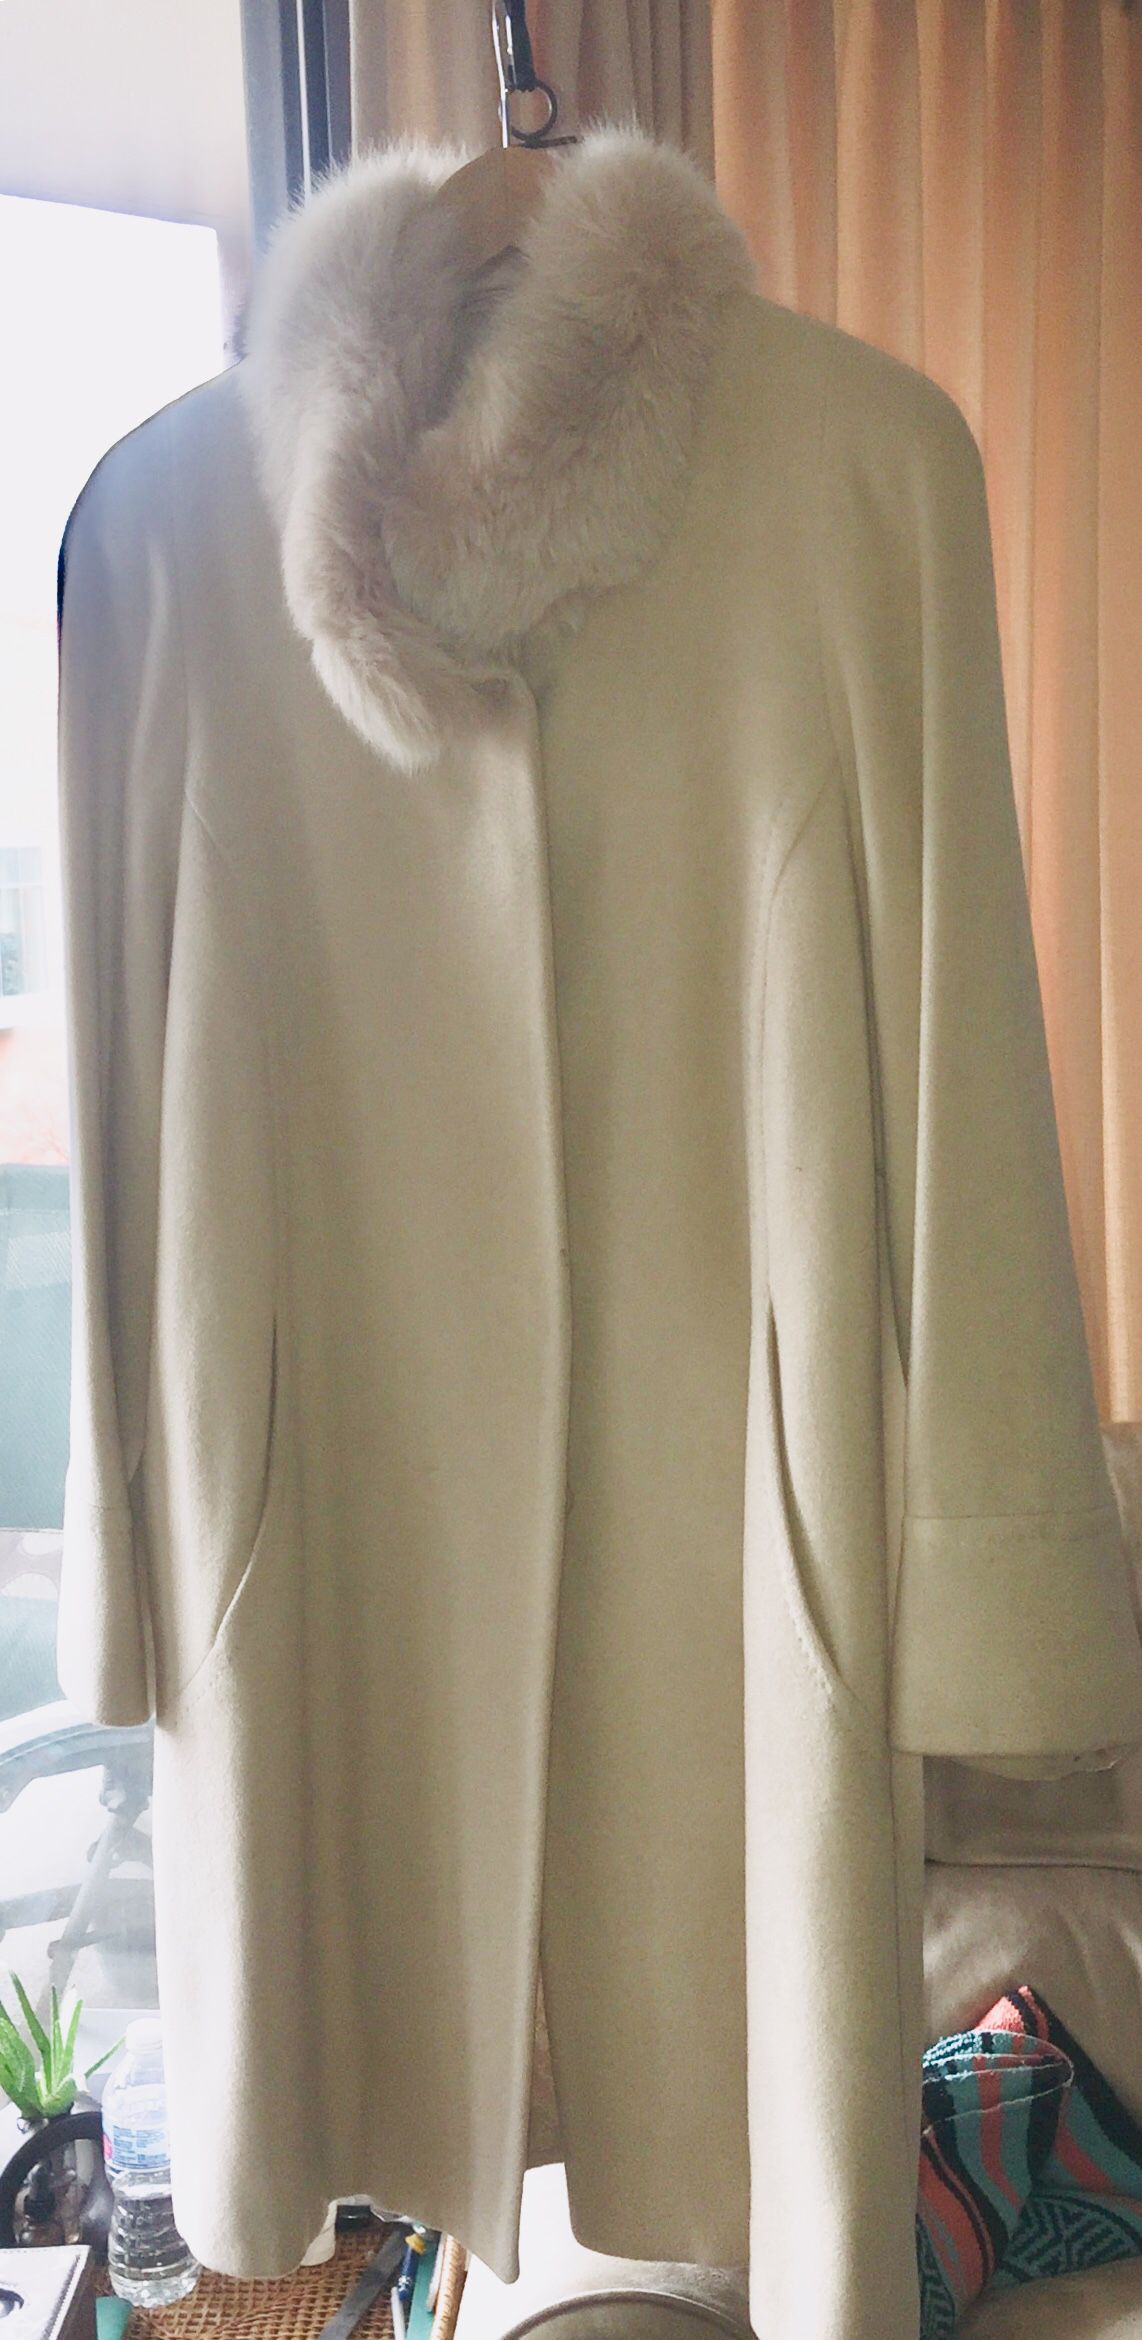 Albert Nipon Off White/Beige  Dress Coat Size14